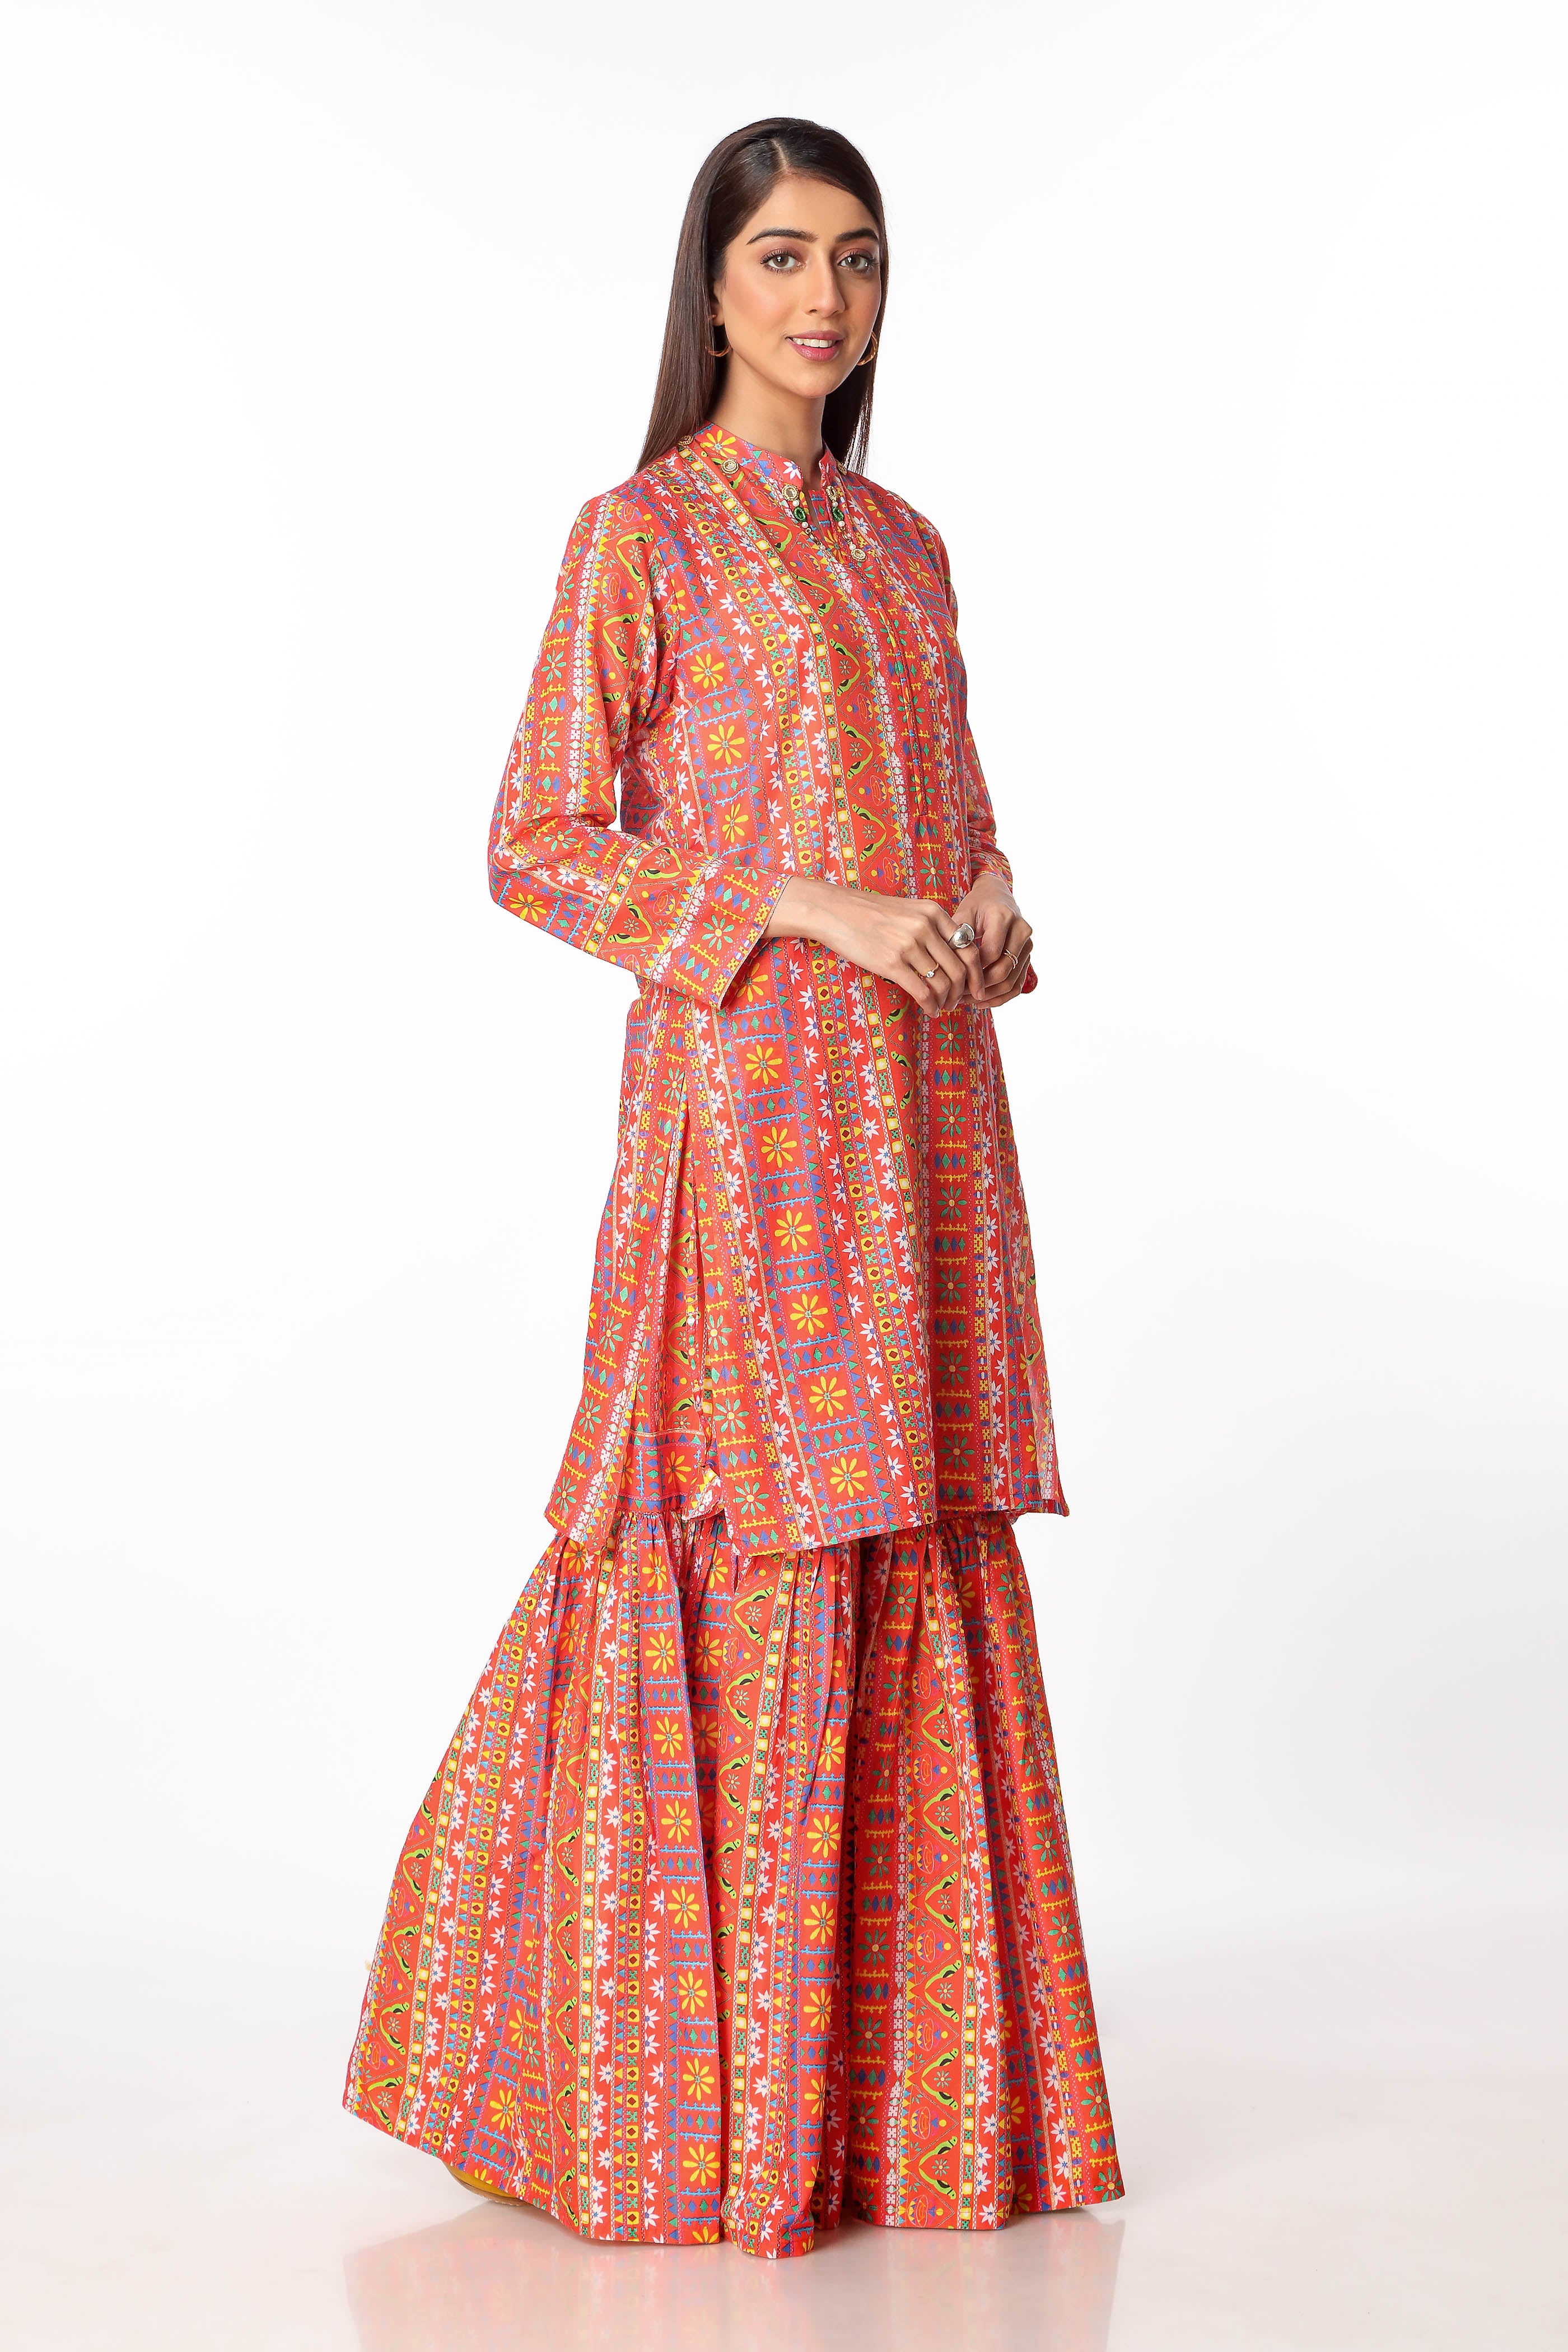 Balochi Pattern in Multi coloured Printed Lawn fabric 2